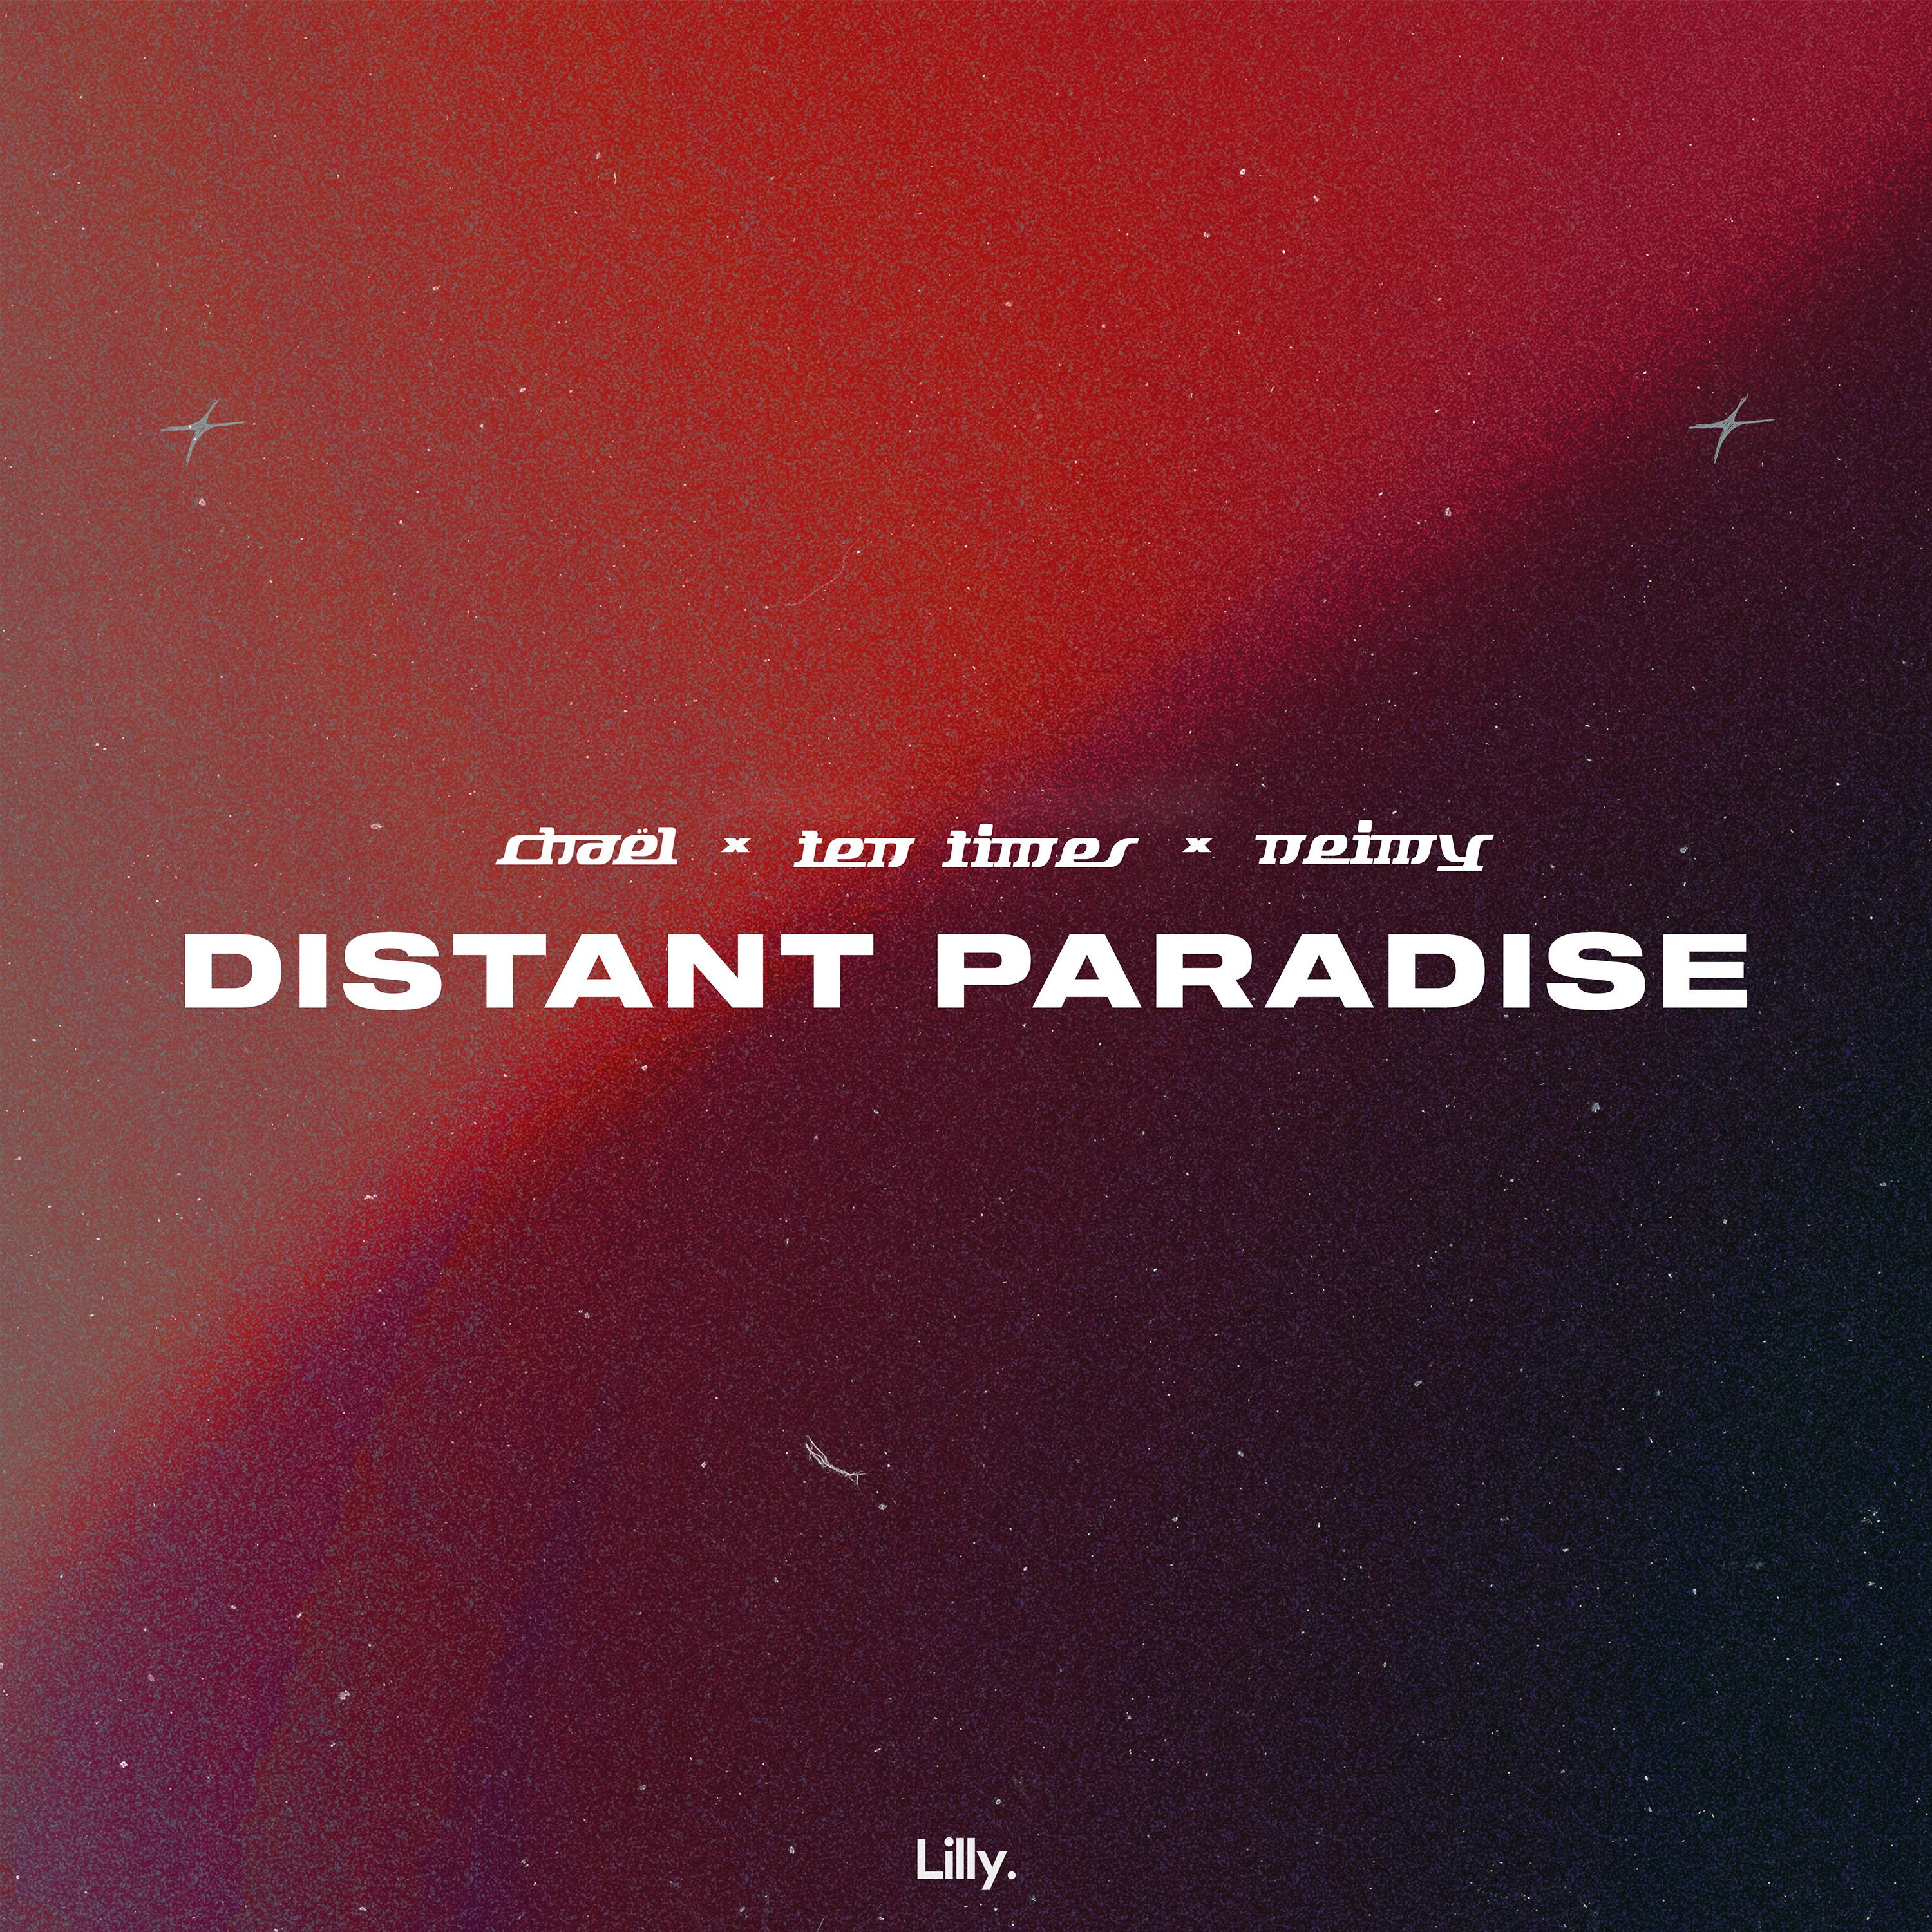 Chaël - Distant Paradise